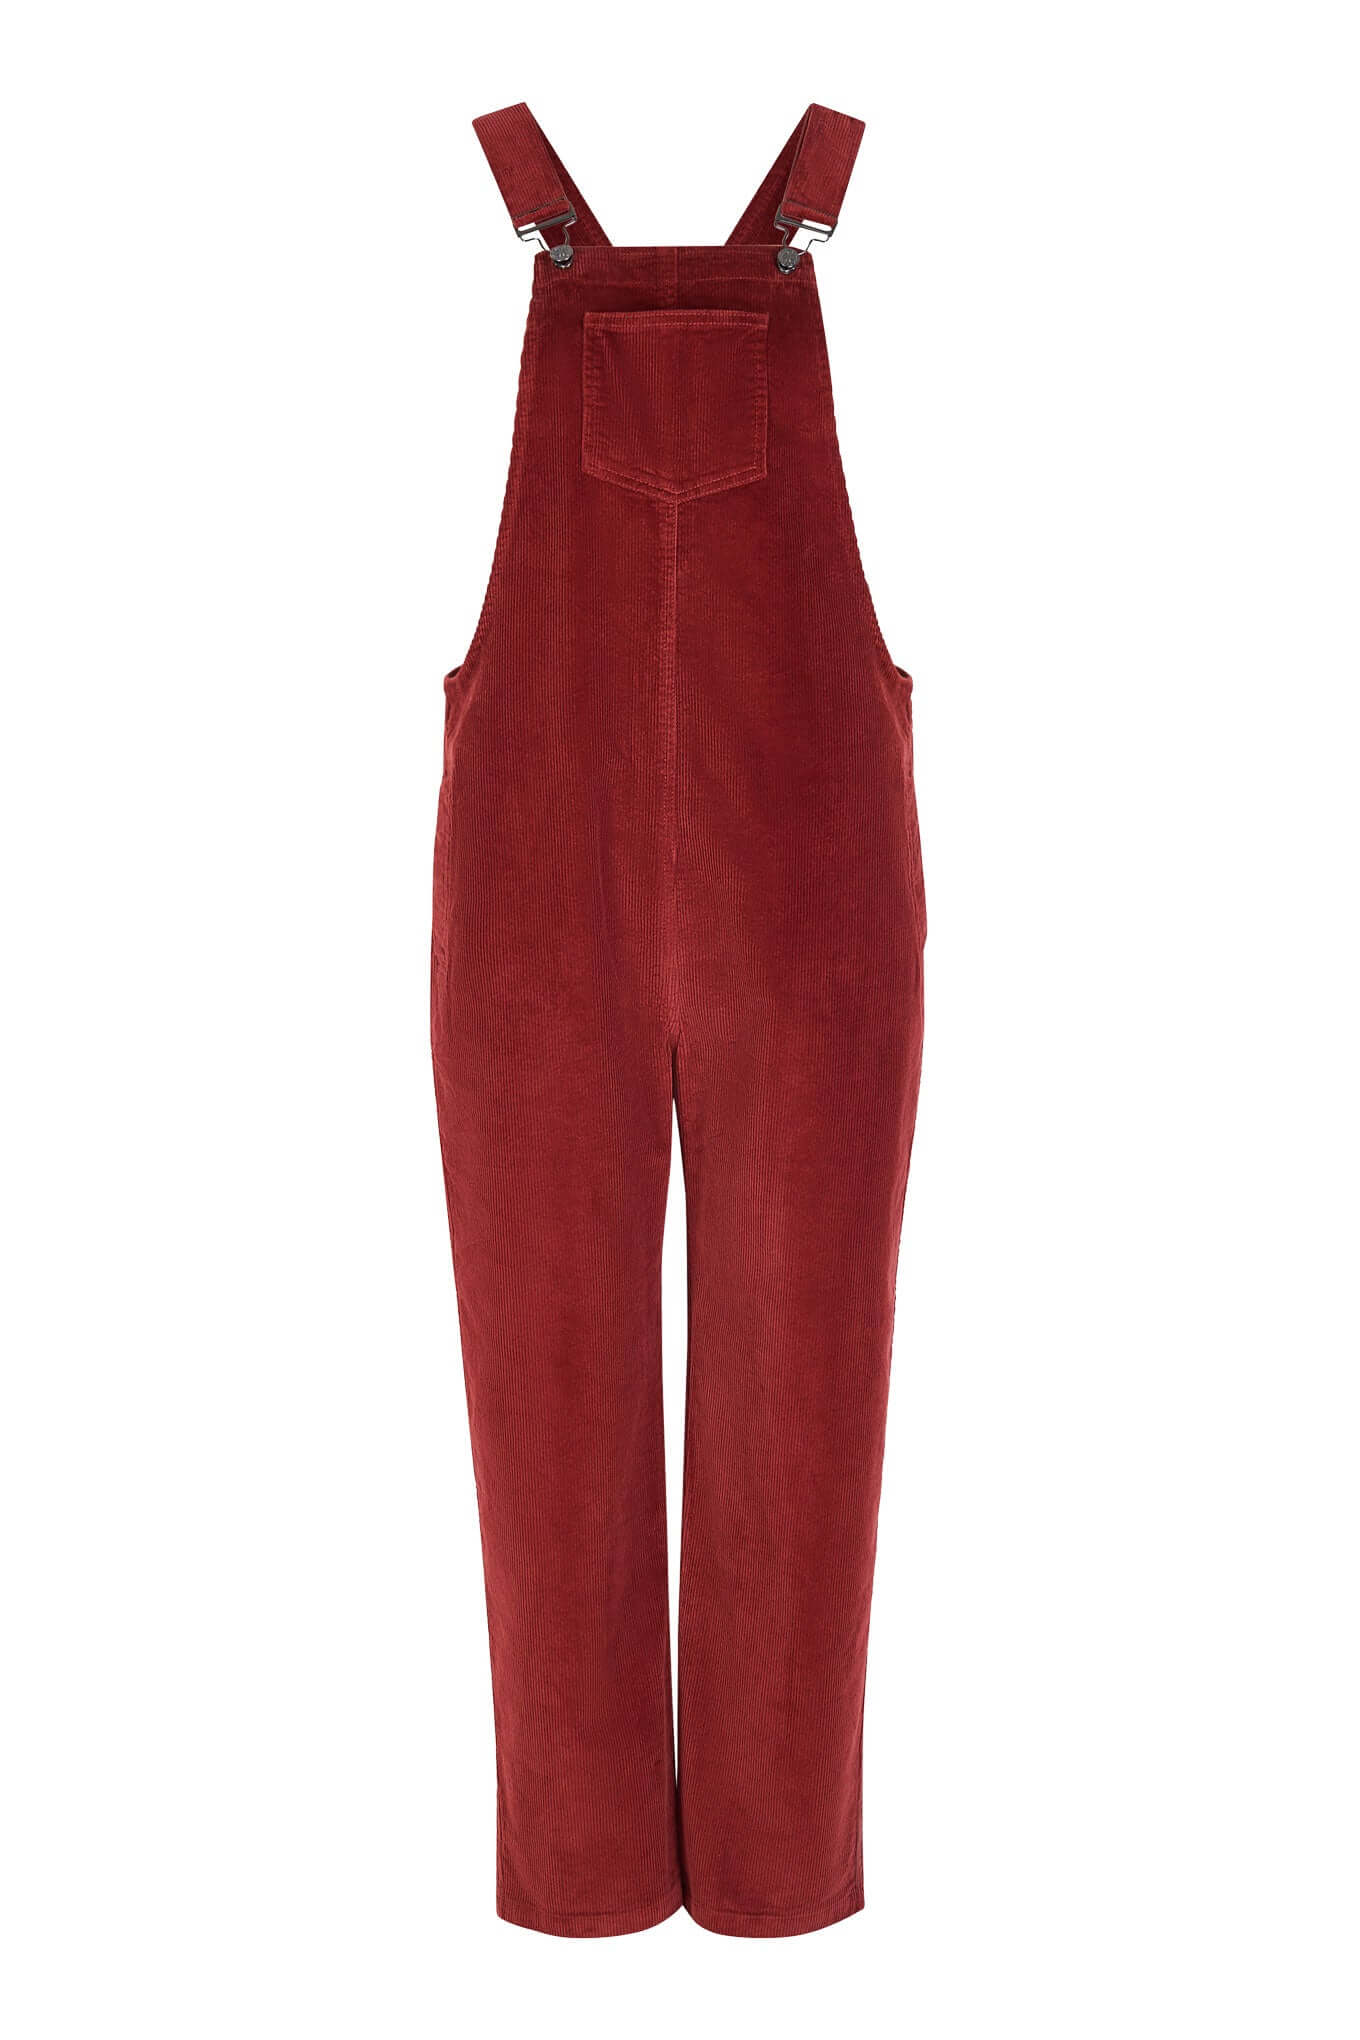 JOY Womens Organic Cotton Dungaree Red - Komodo Fashion